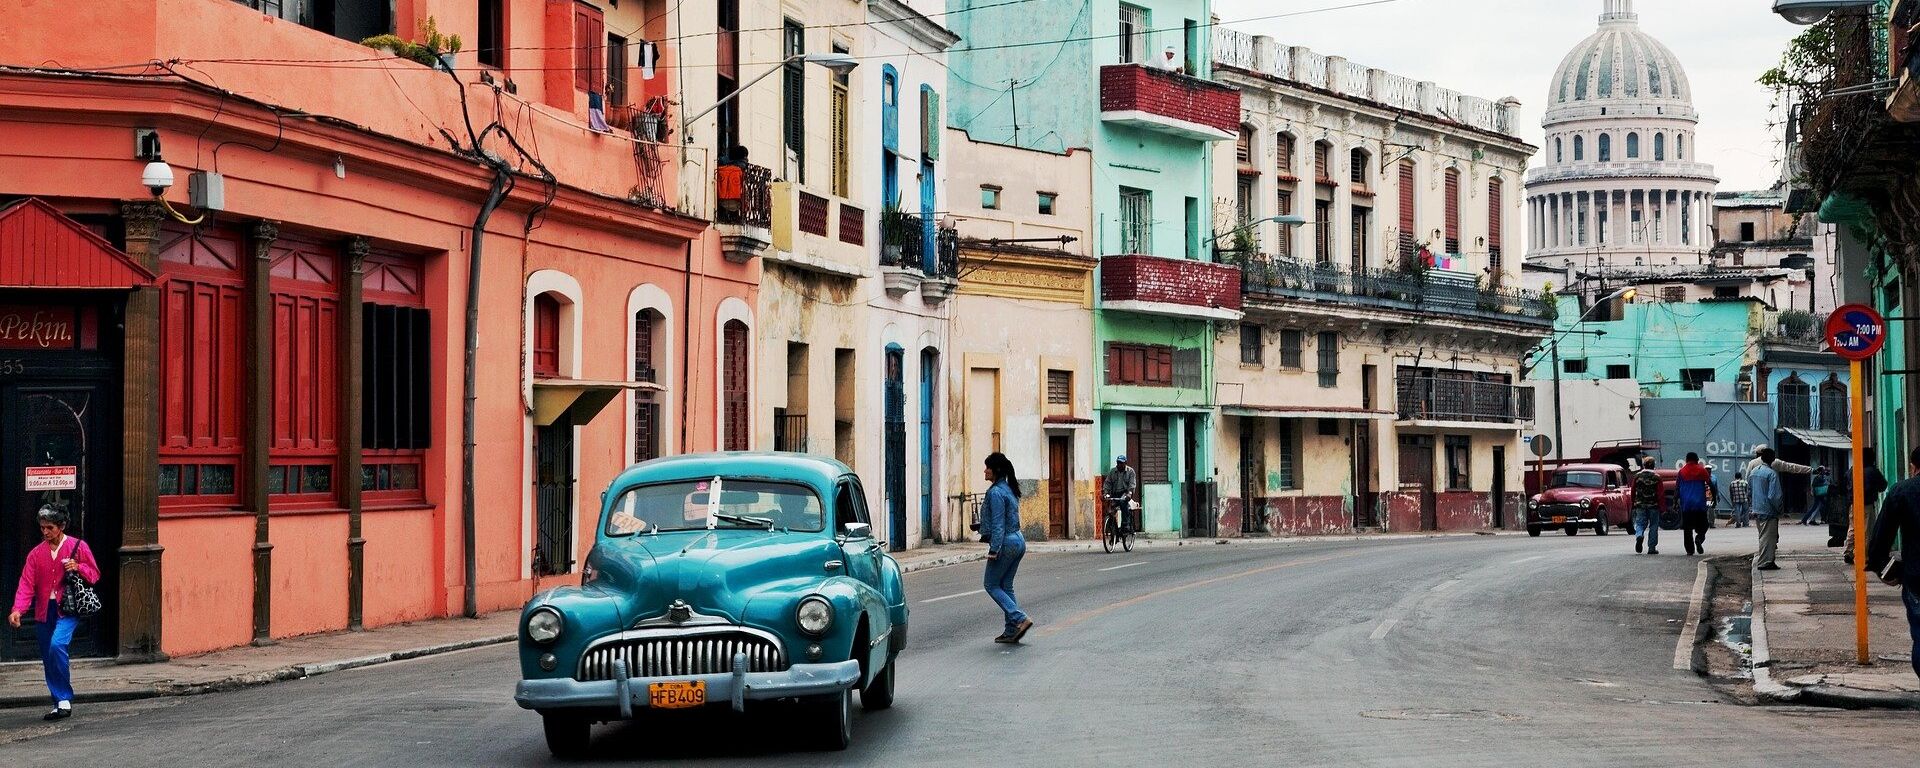 La Habana, capital de Cuba - Sputnik Mundo, 1920, 19.07.2021